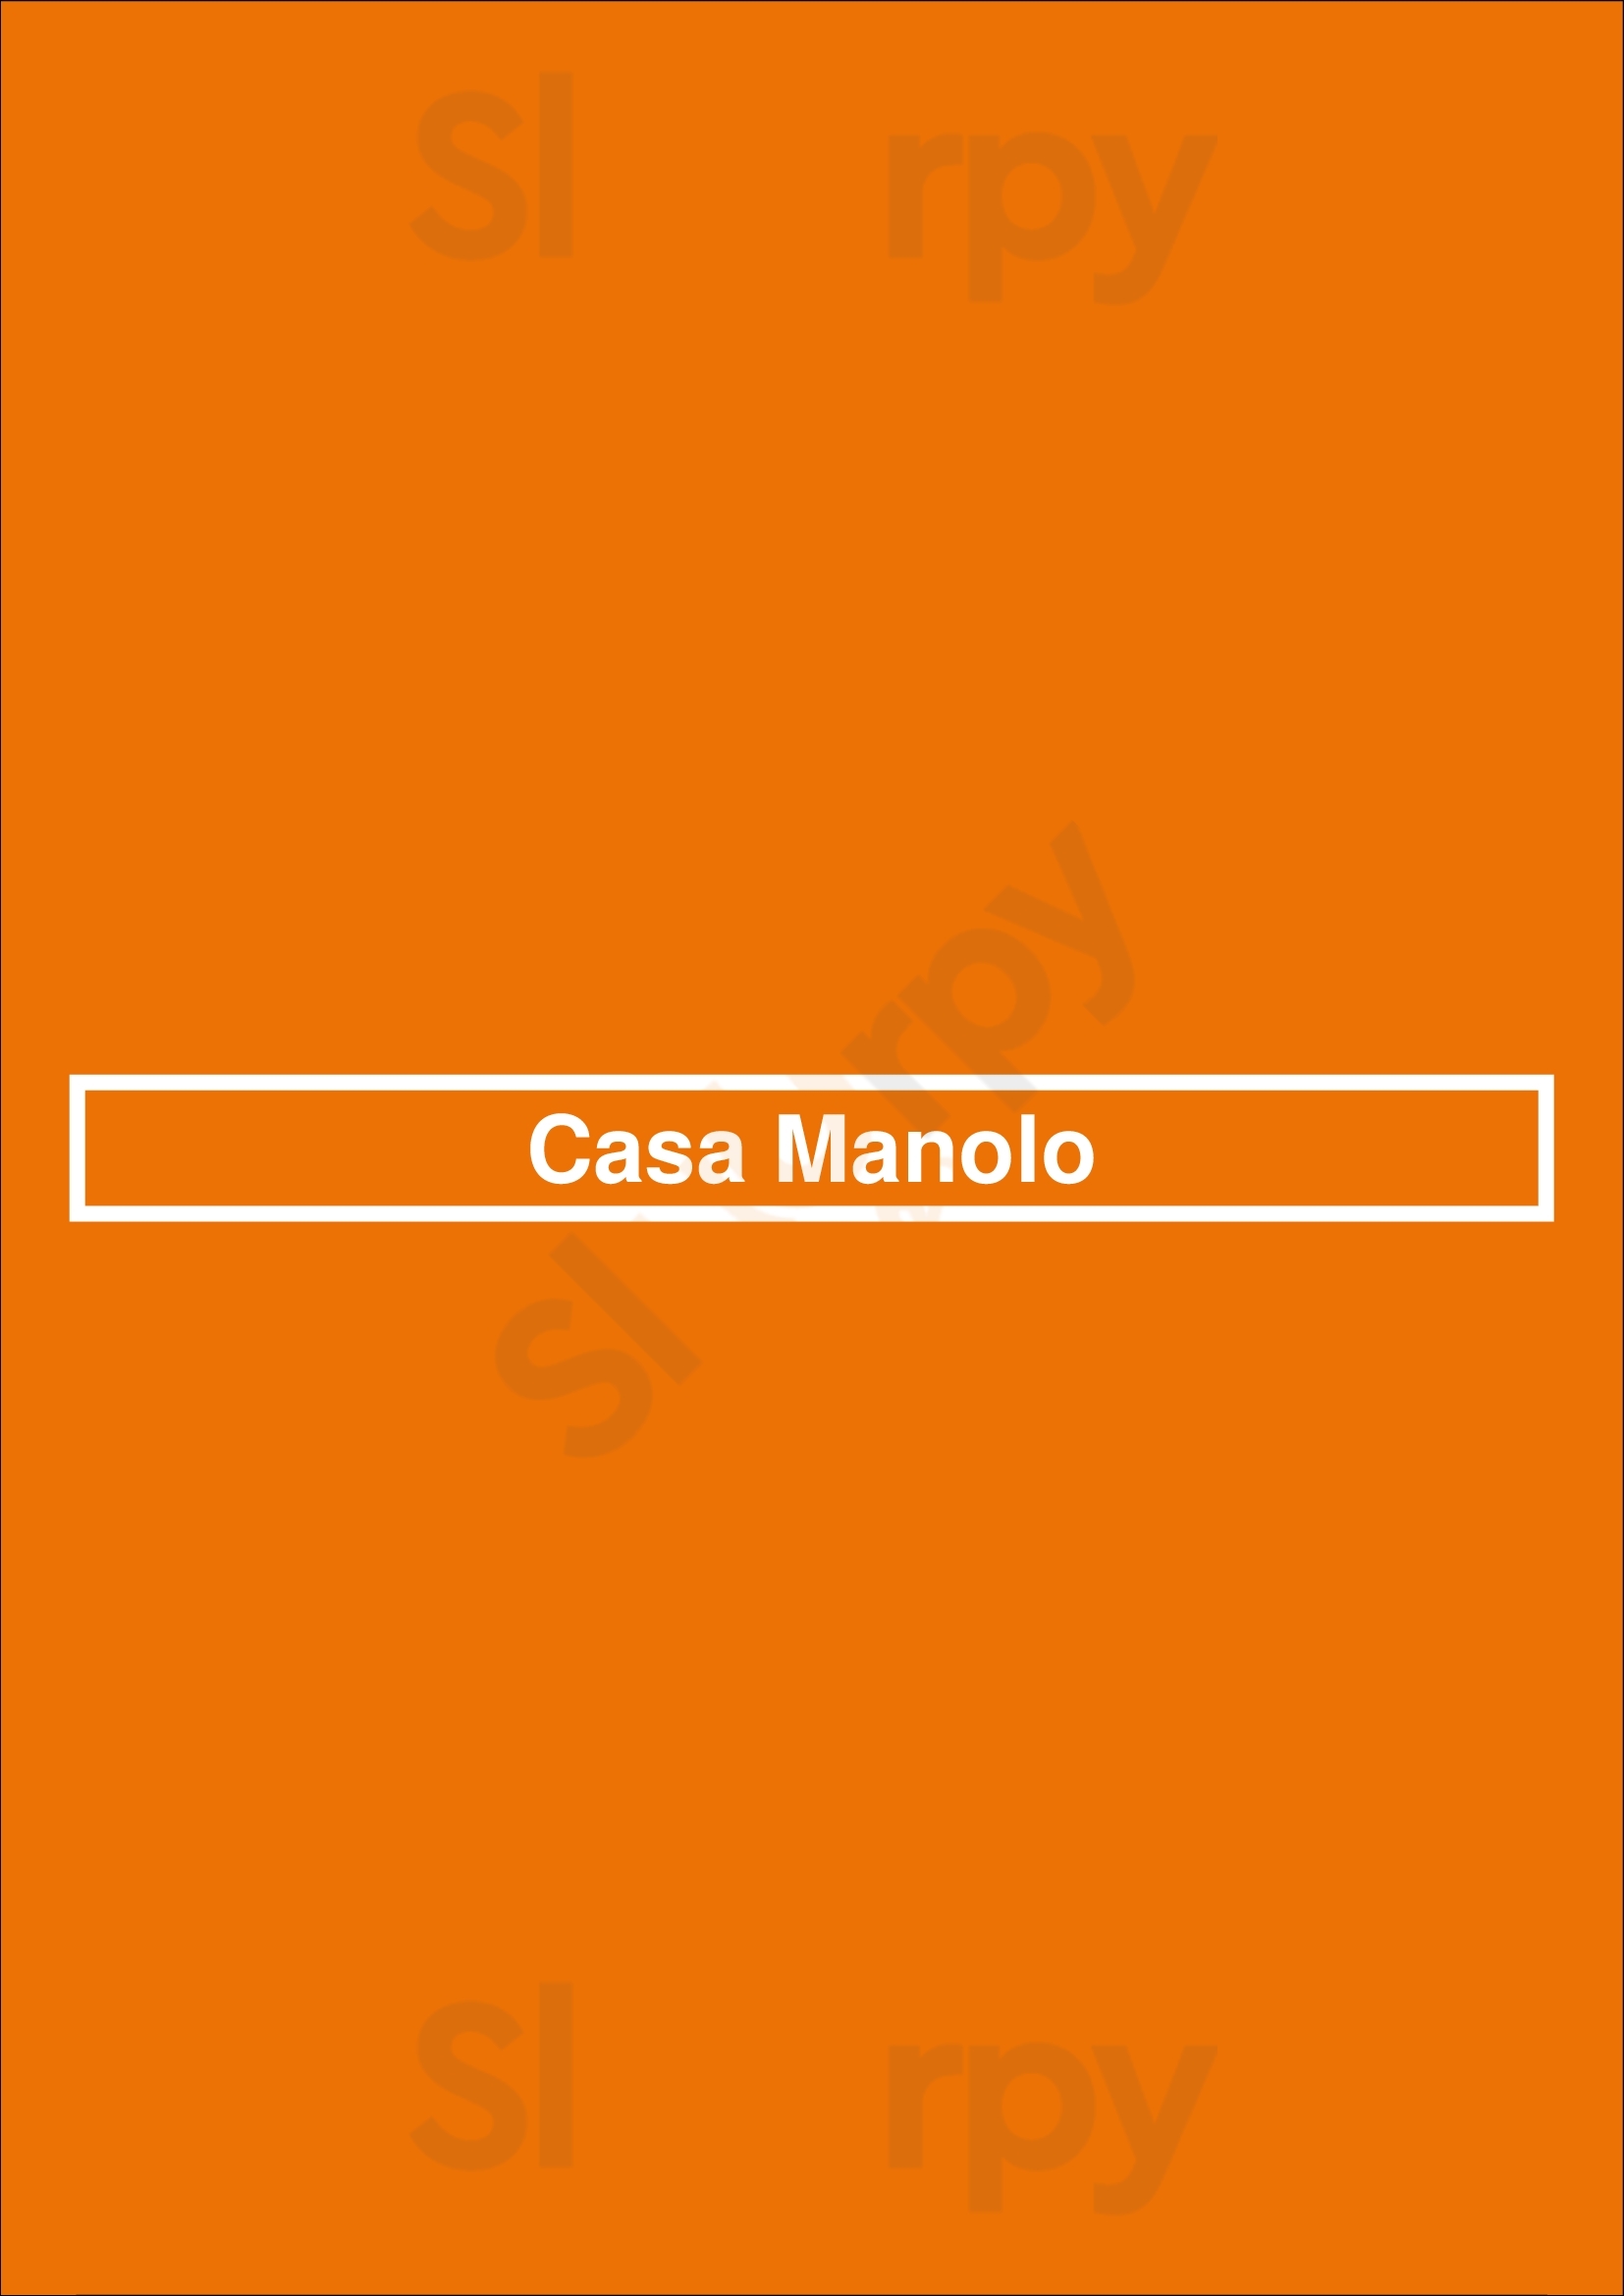 Casa Manolo Madrid Menu - 1